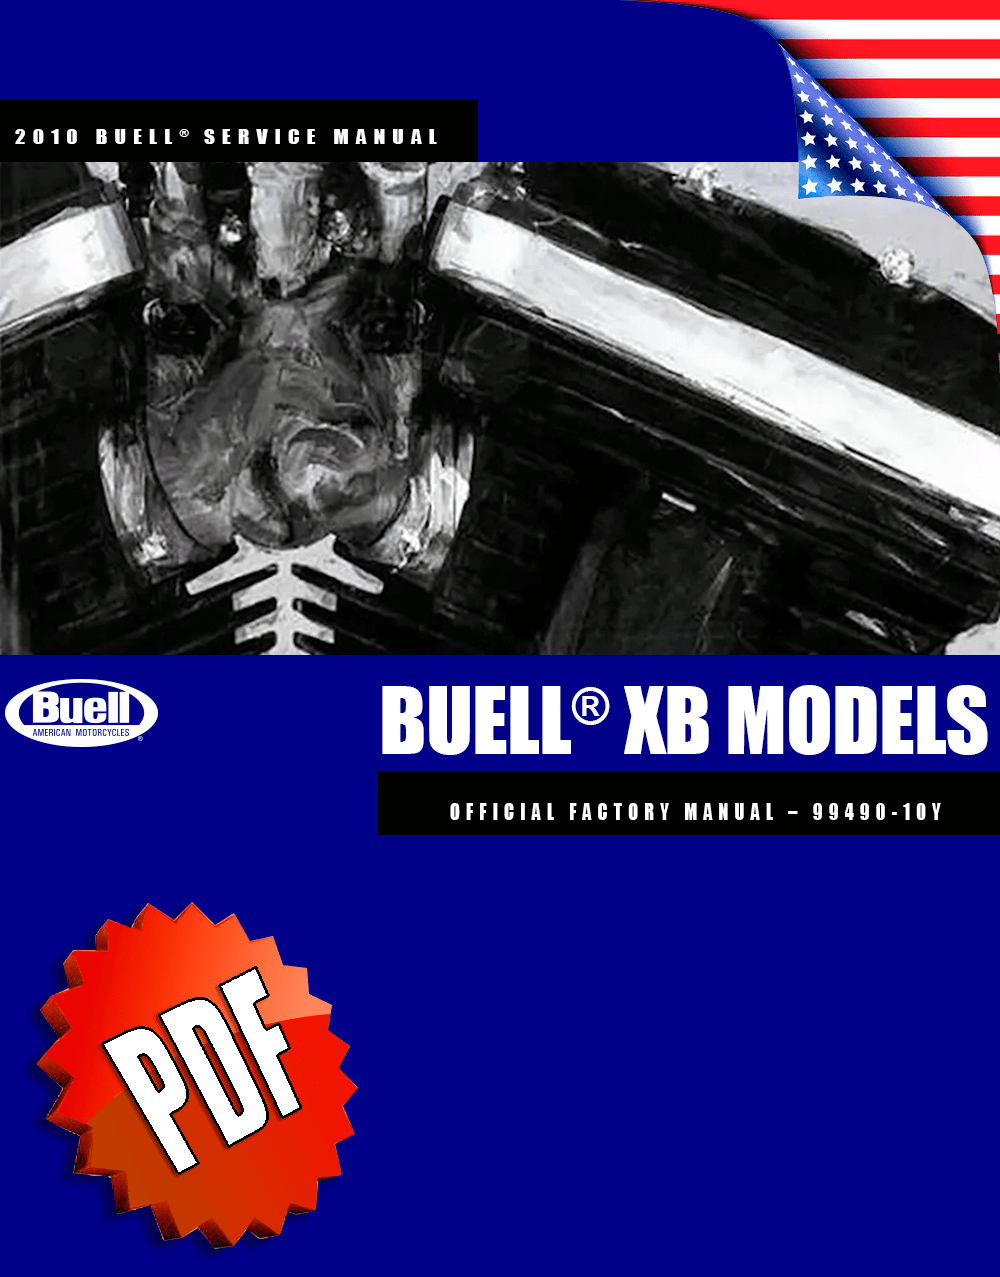 Buell XB Models 2010